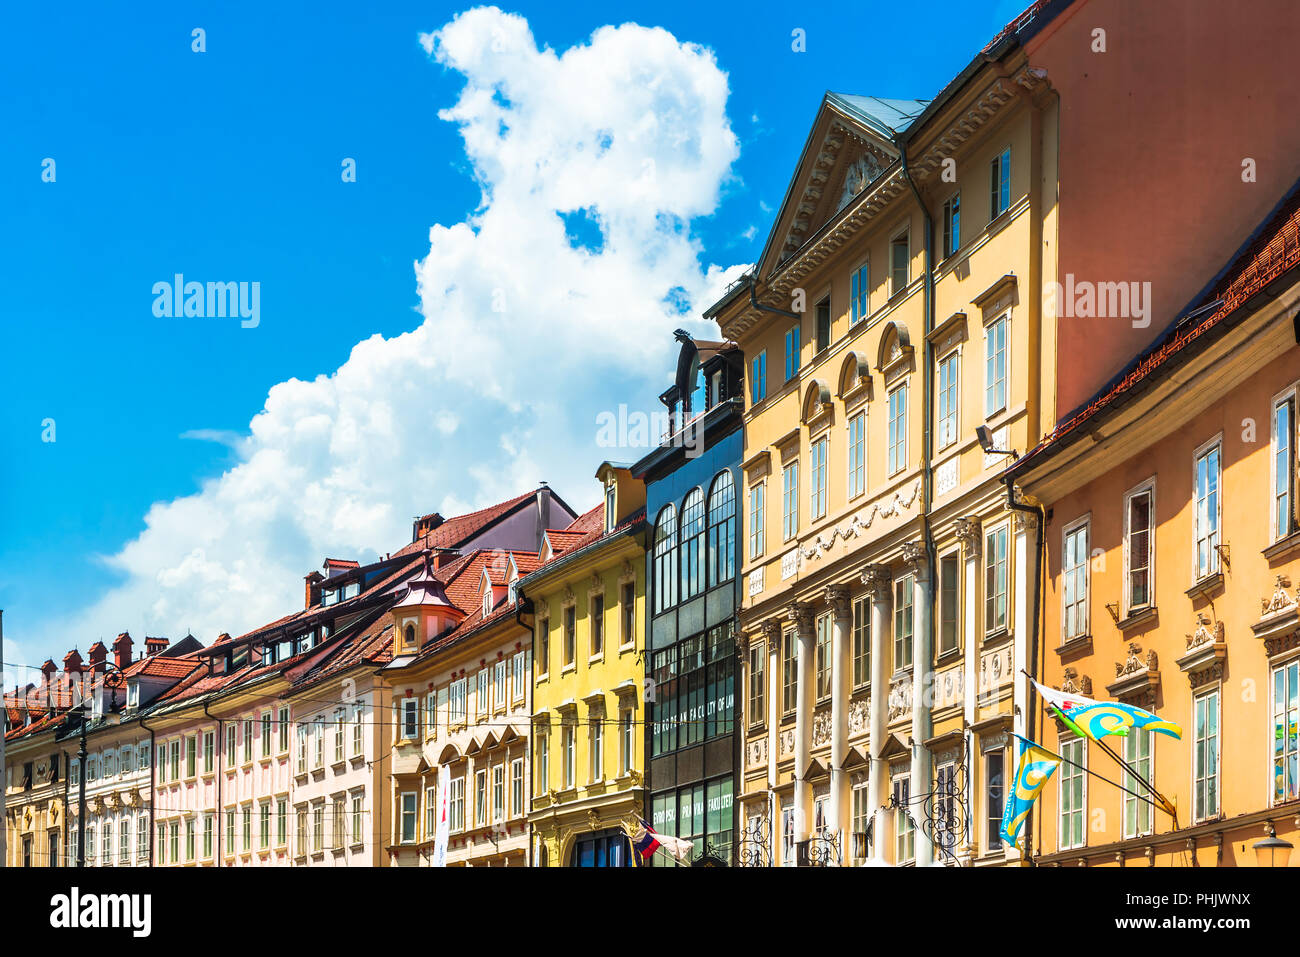 Colorful historic buildings in the old town of Ljubljana - Slovenia Stock Photo